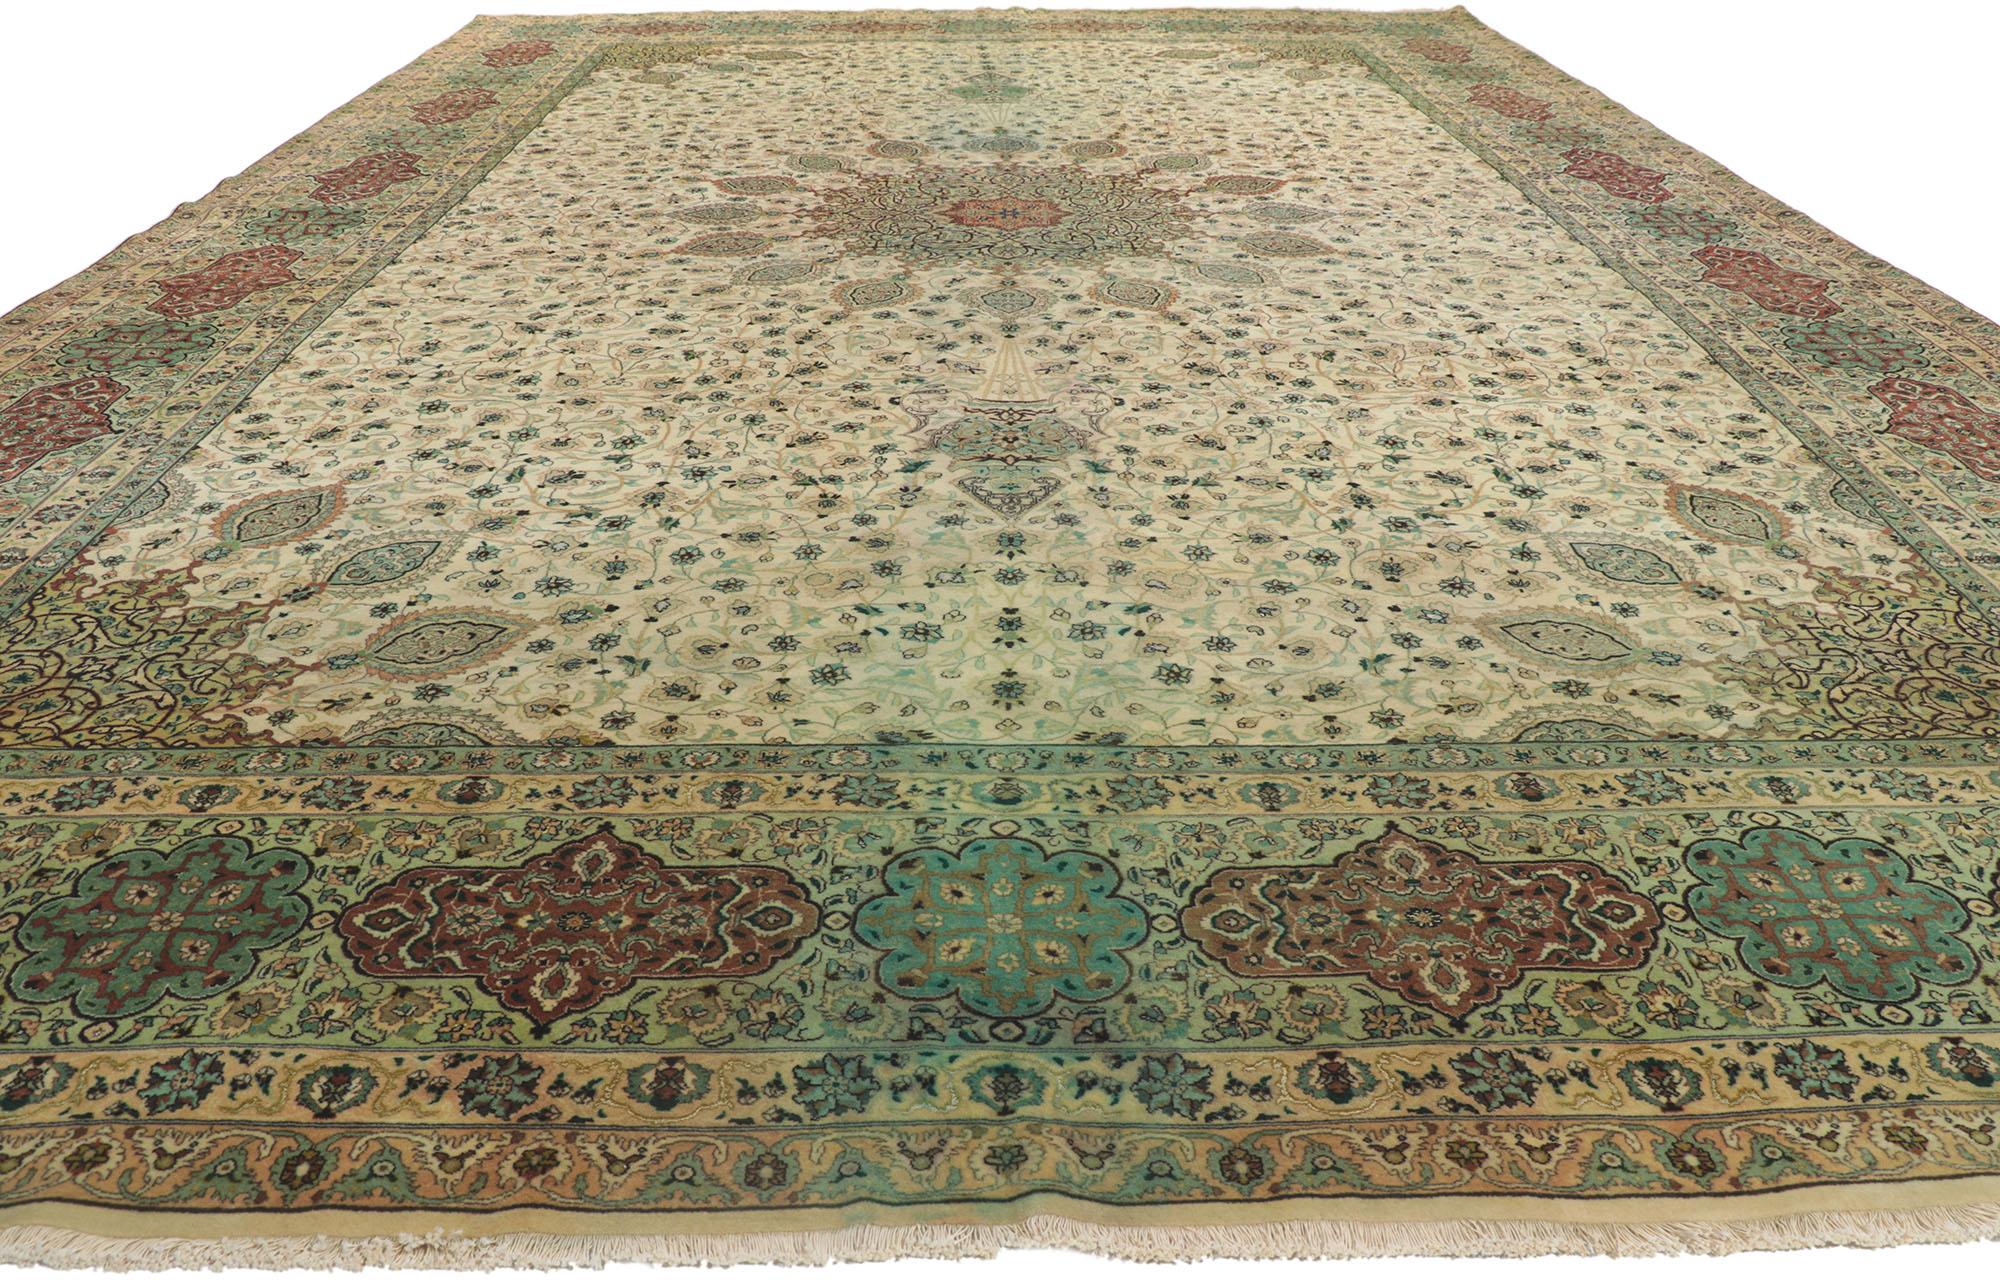 familiarity with tabriz carpet designs